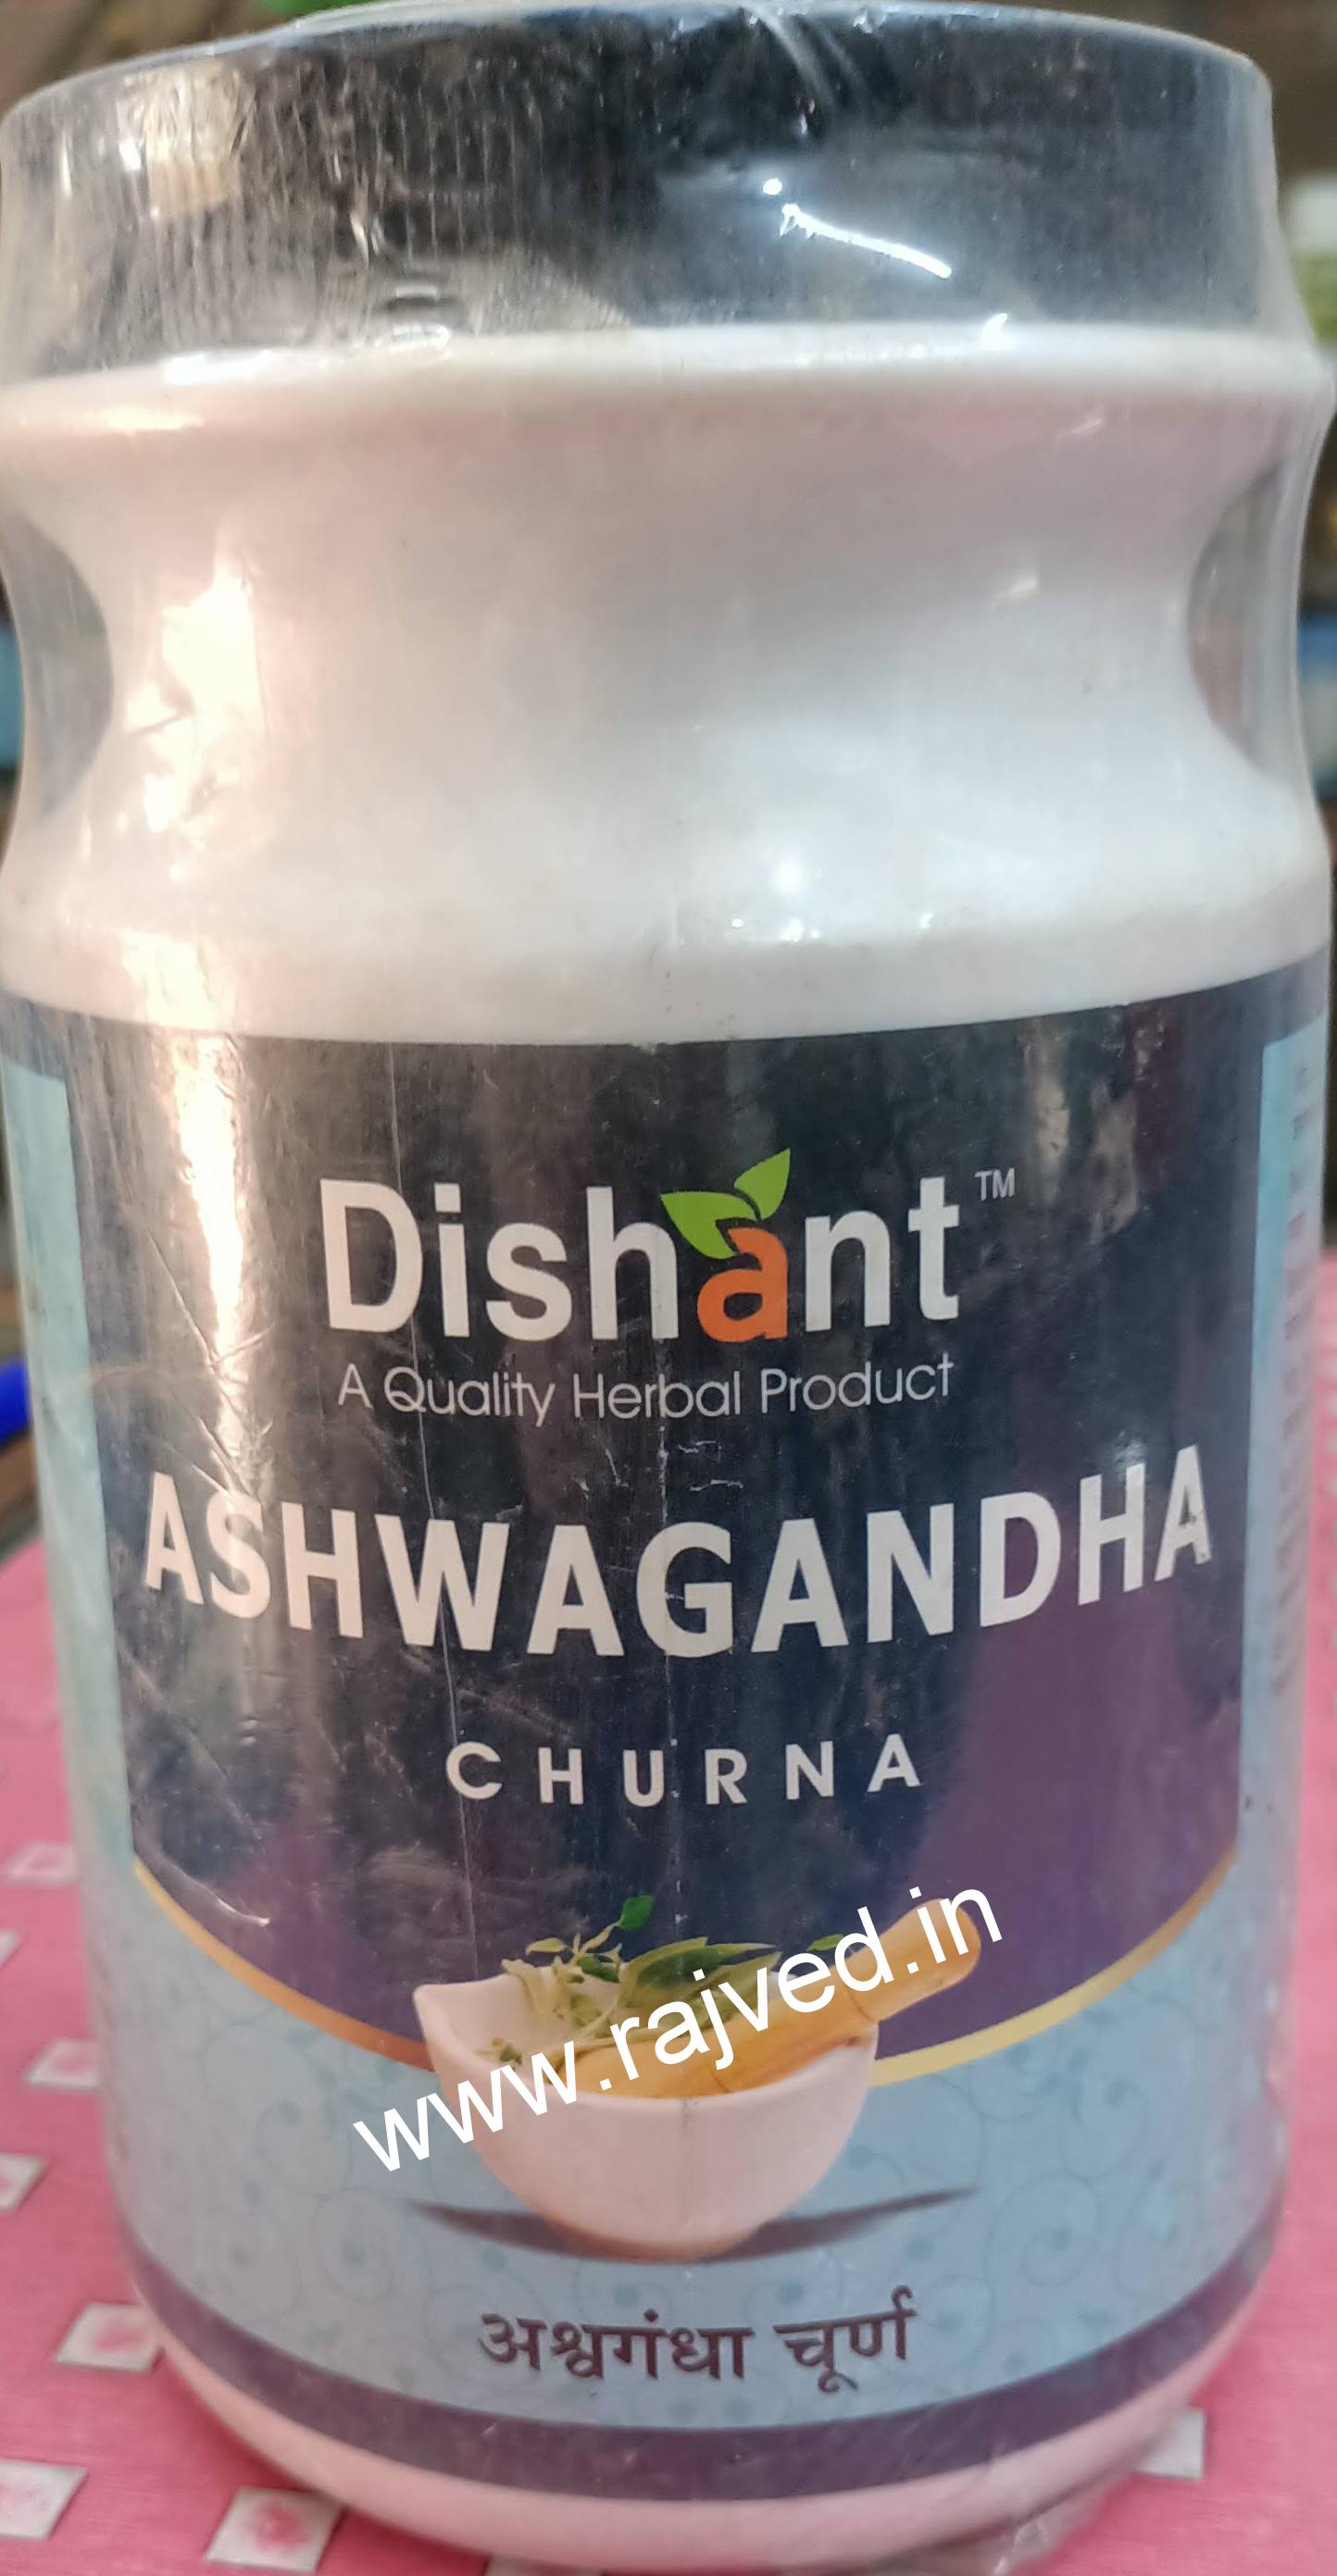 ashwagandha churna 500 gm upto 20% off dishant ayurvedic suppliers